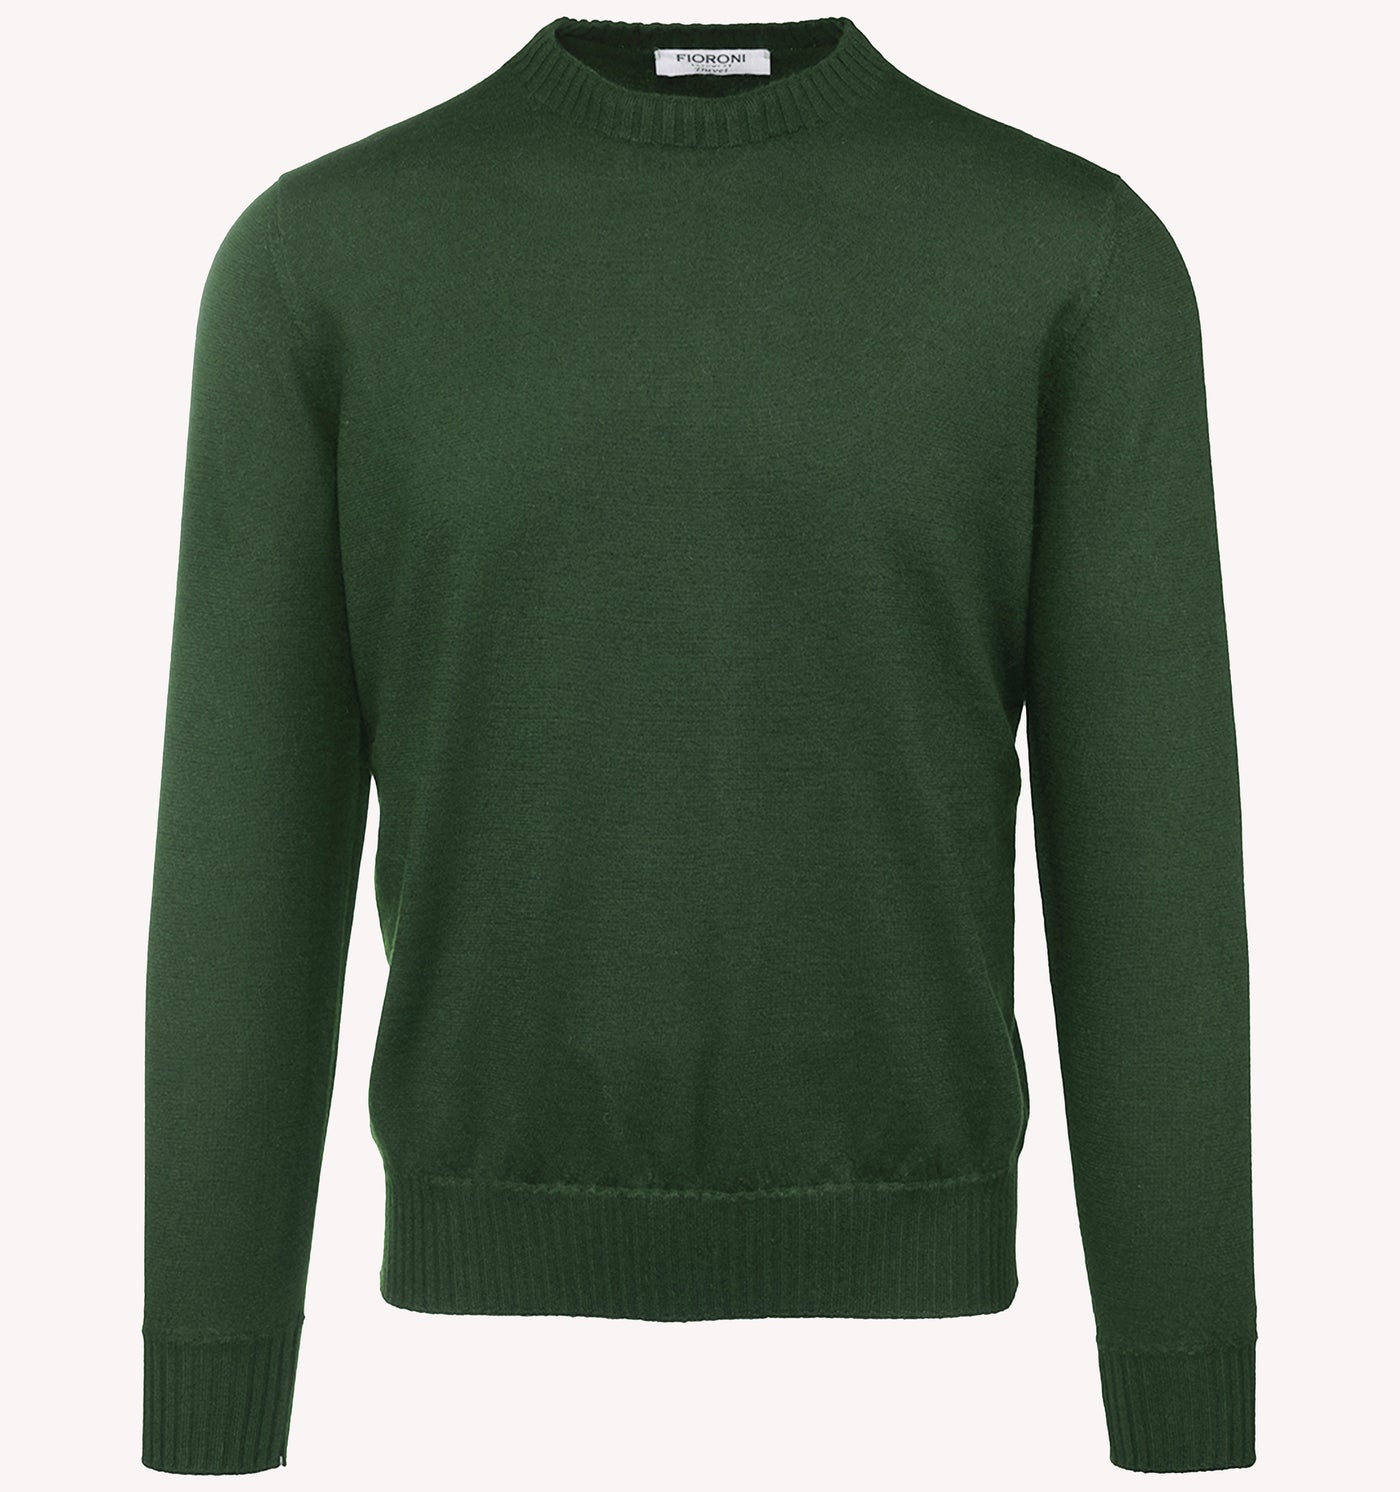 Fioroni Duvet Sweater in Green